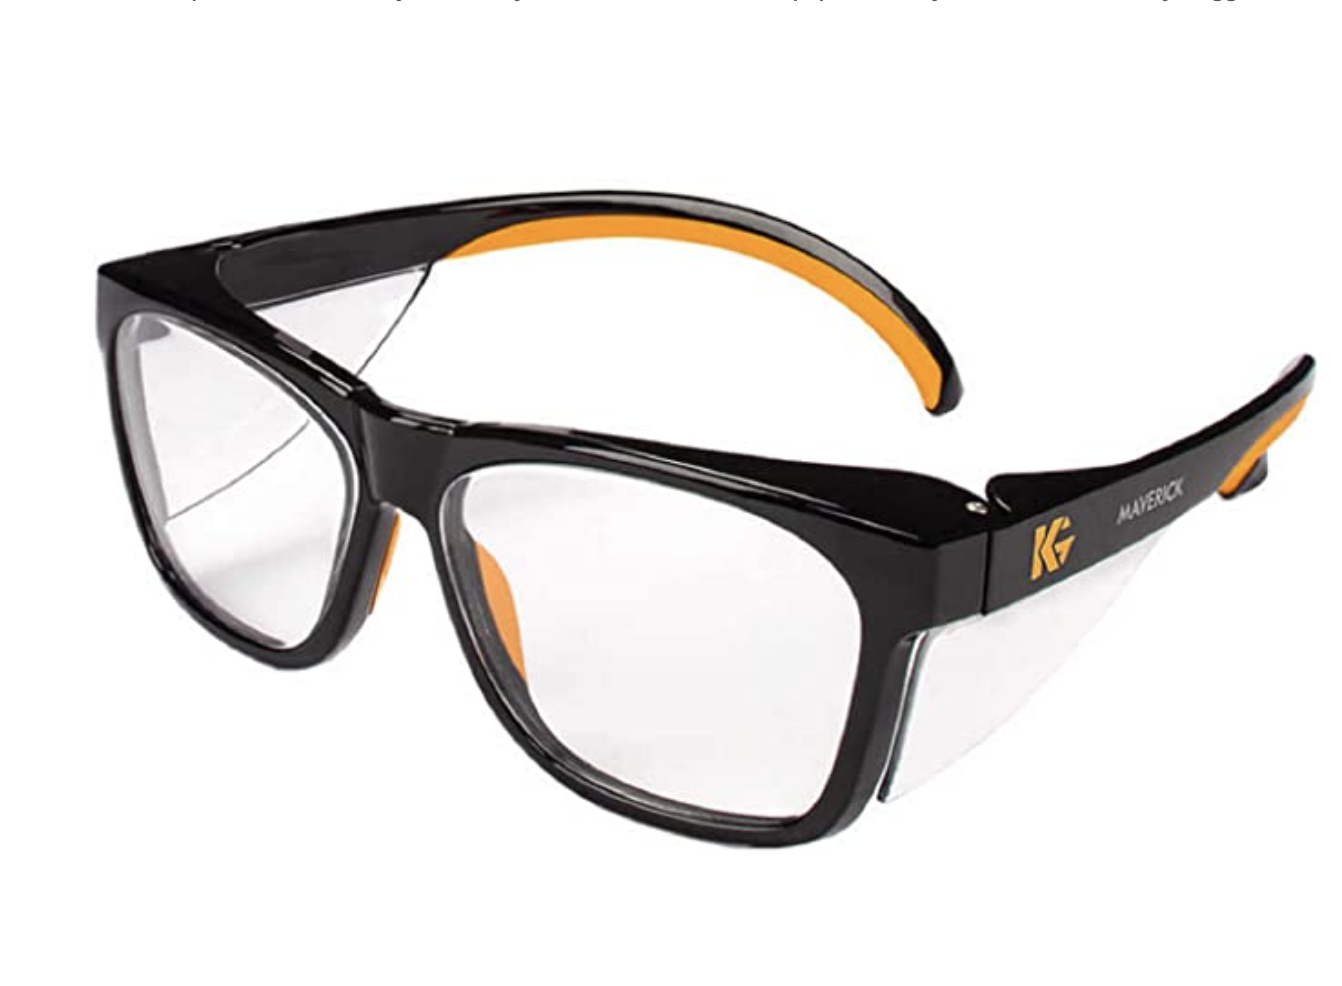 Kleenguard Maverick Side Shield Anti-Glare Safety Glasses